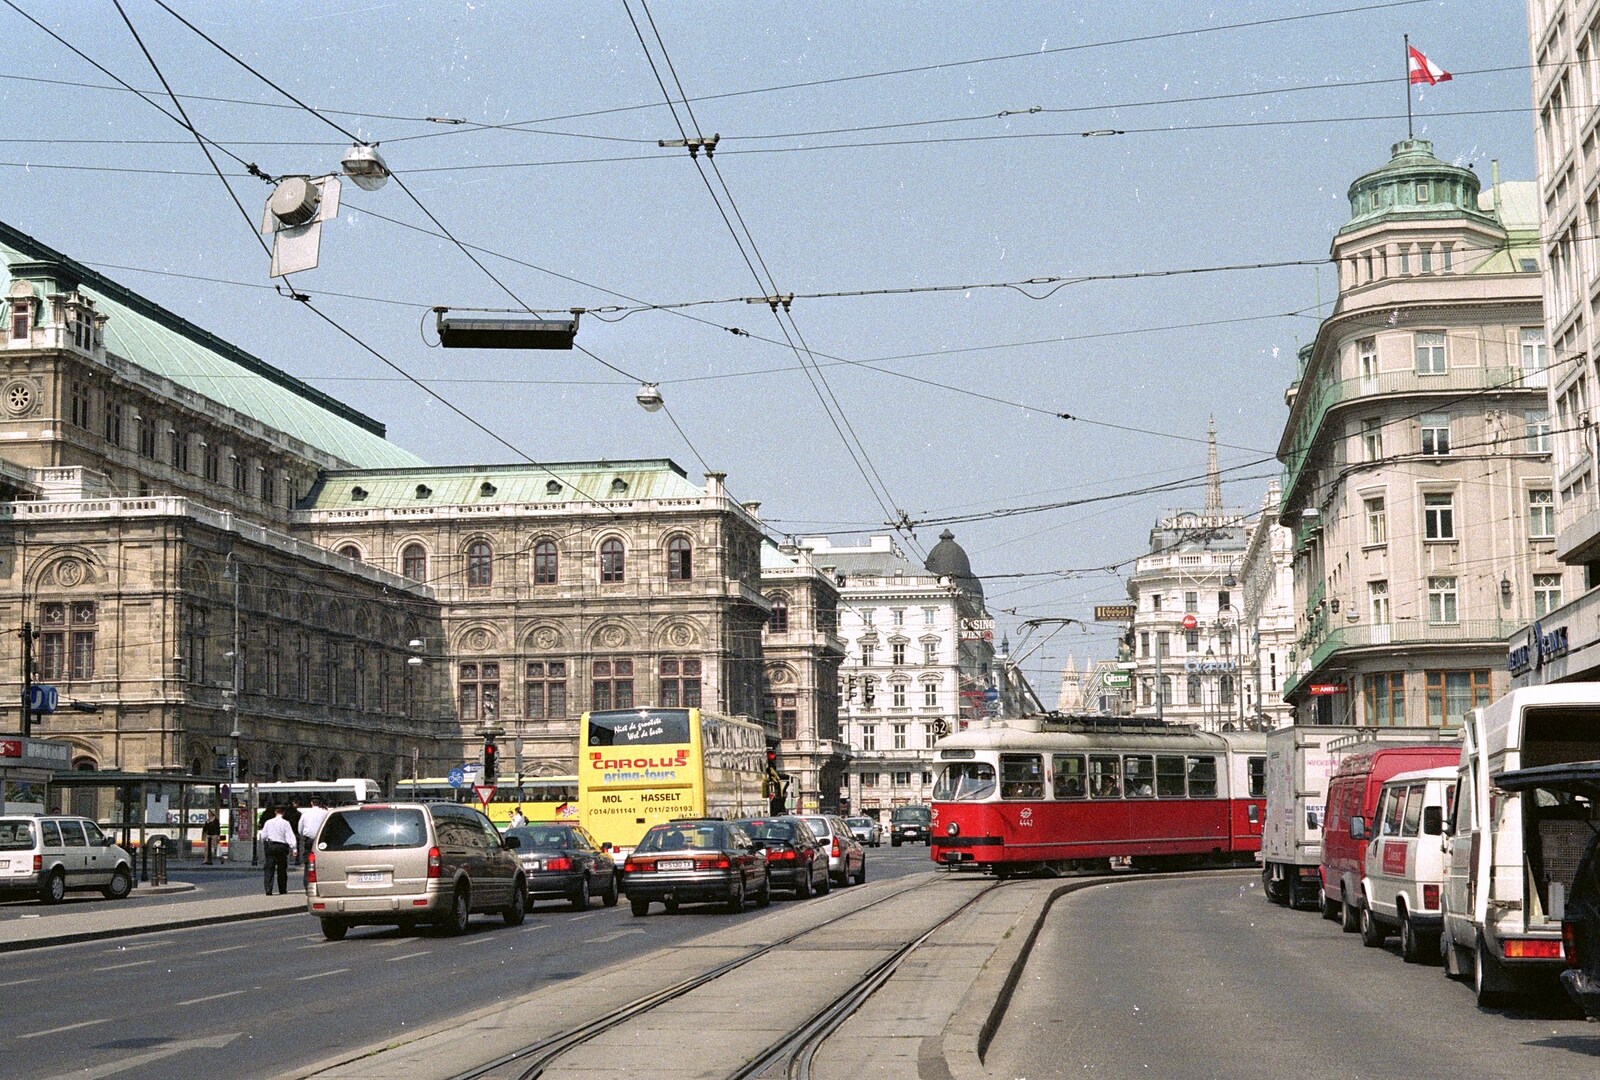 A Wien tram from A Postcard From Hofburg Palace, Vienna, Austria - 18th April 2000